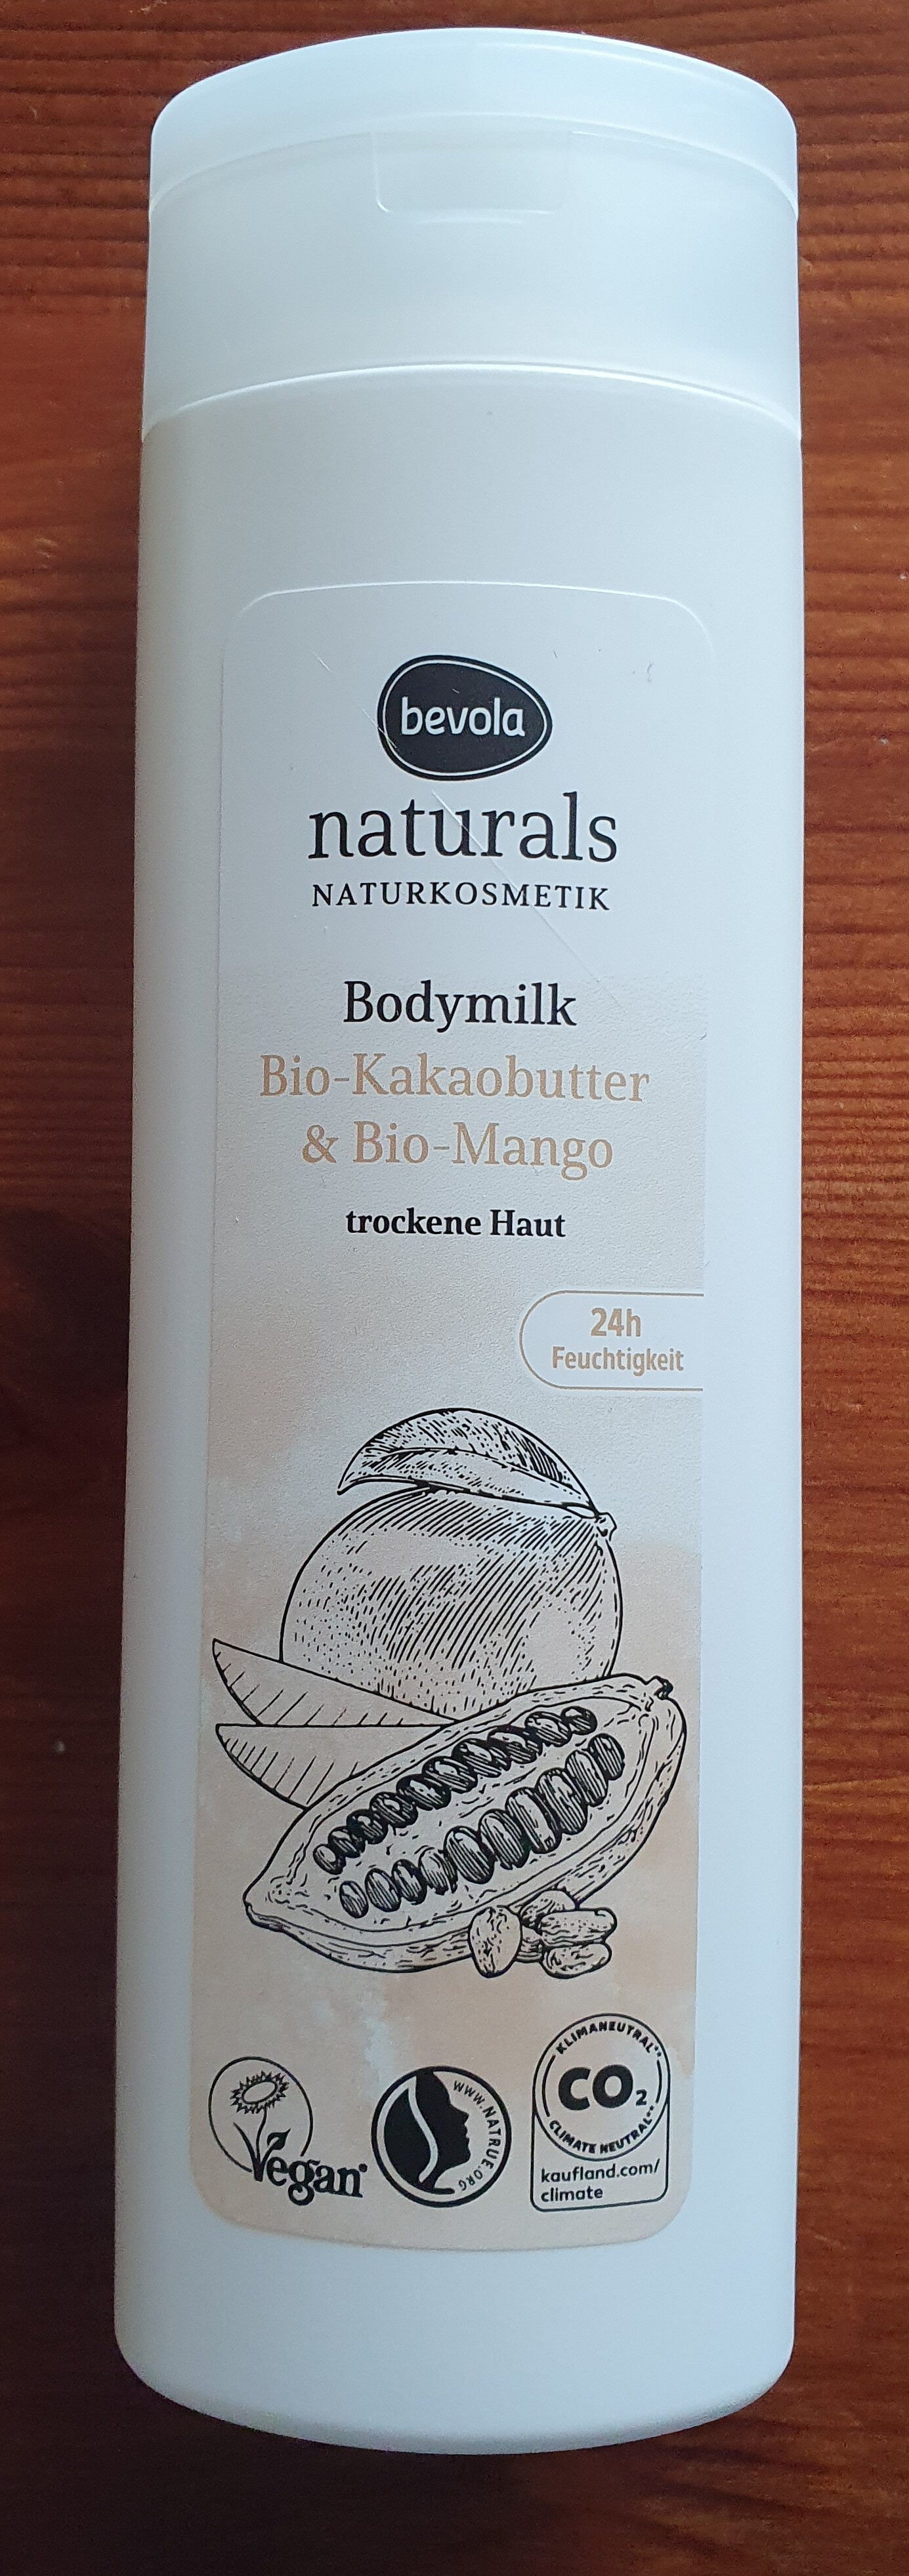 naturals Bodymilk - Produkt - de